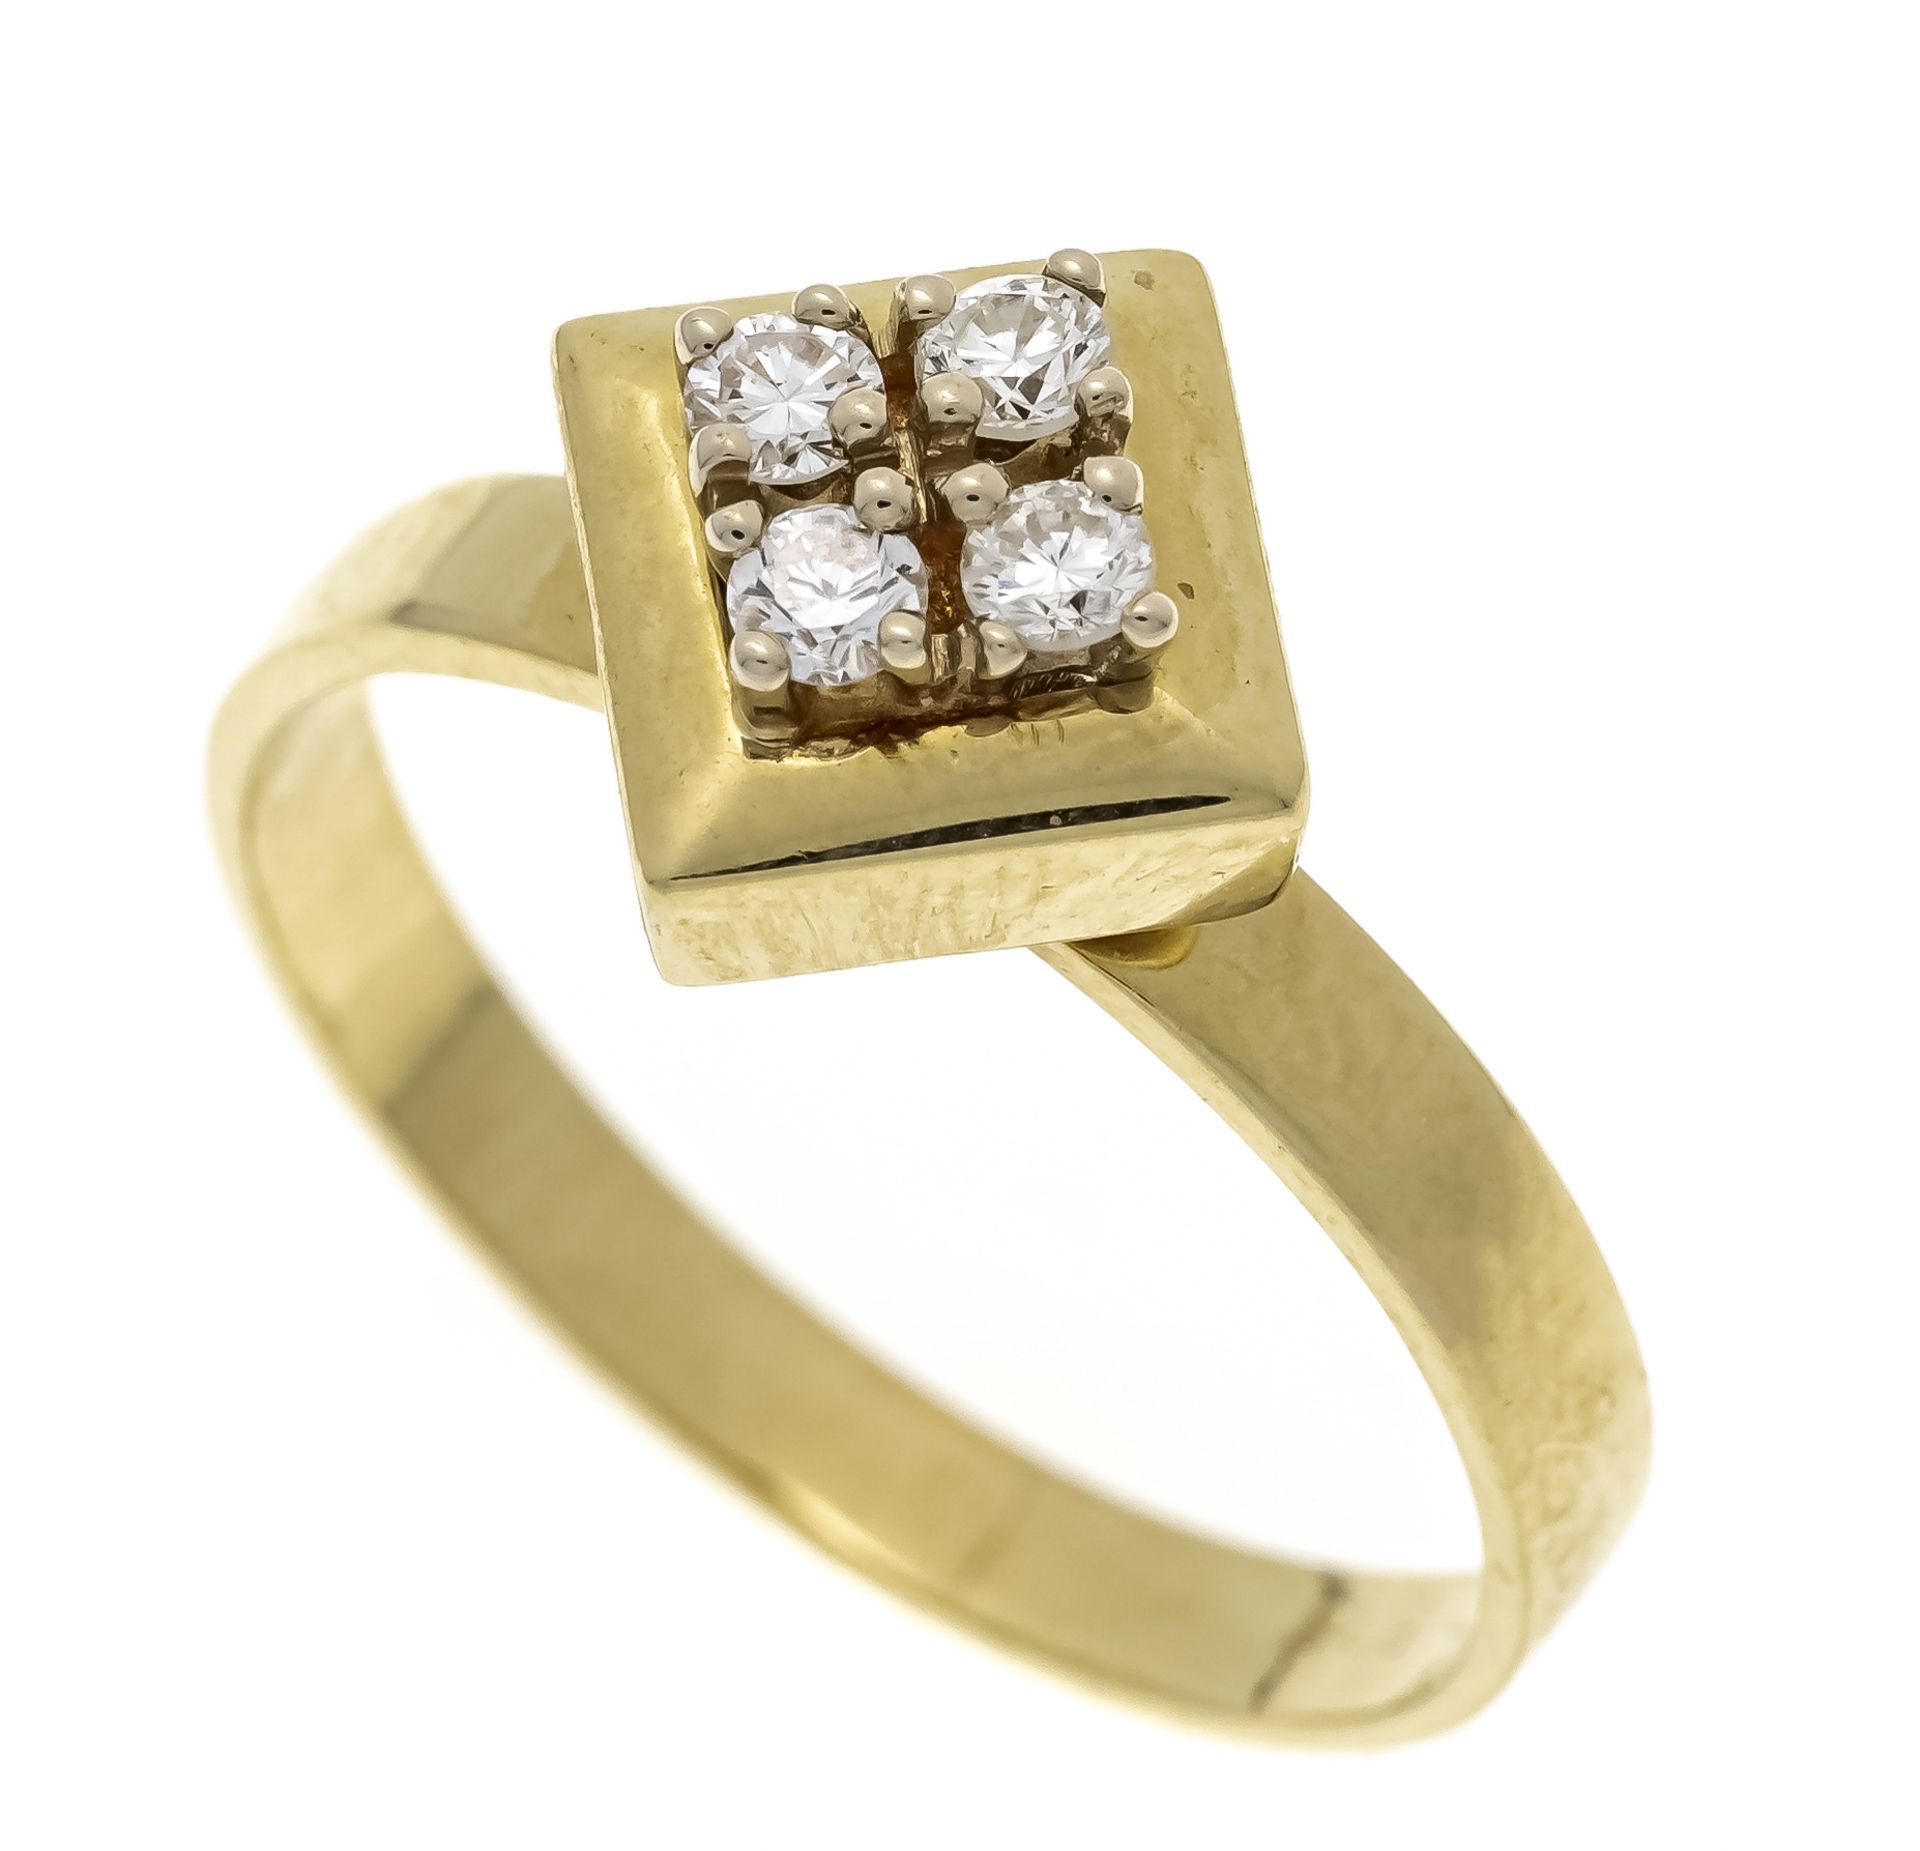 Brilliant ring GG 585/000 with 4 brilliant-cut diamonds, total 0.20 ct W/SI, RG 53, 2.7 g